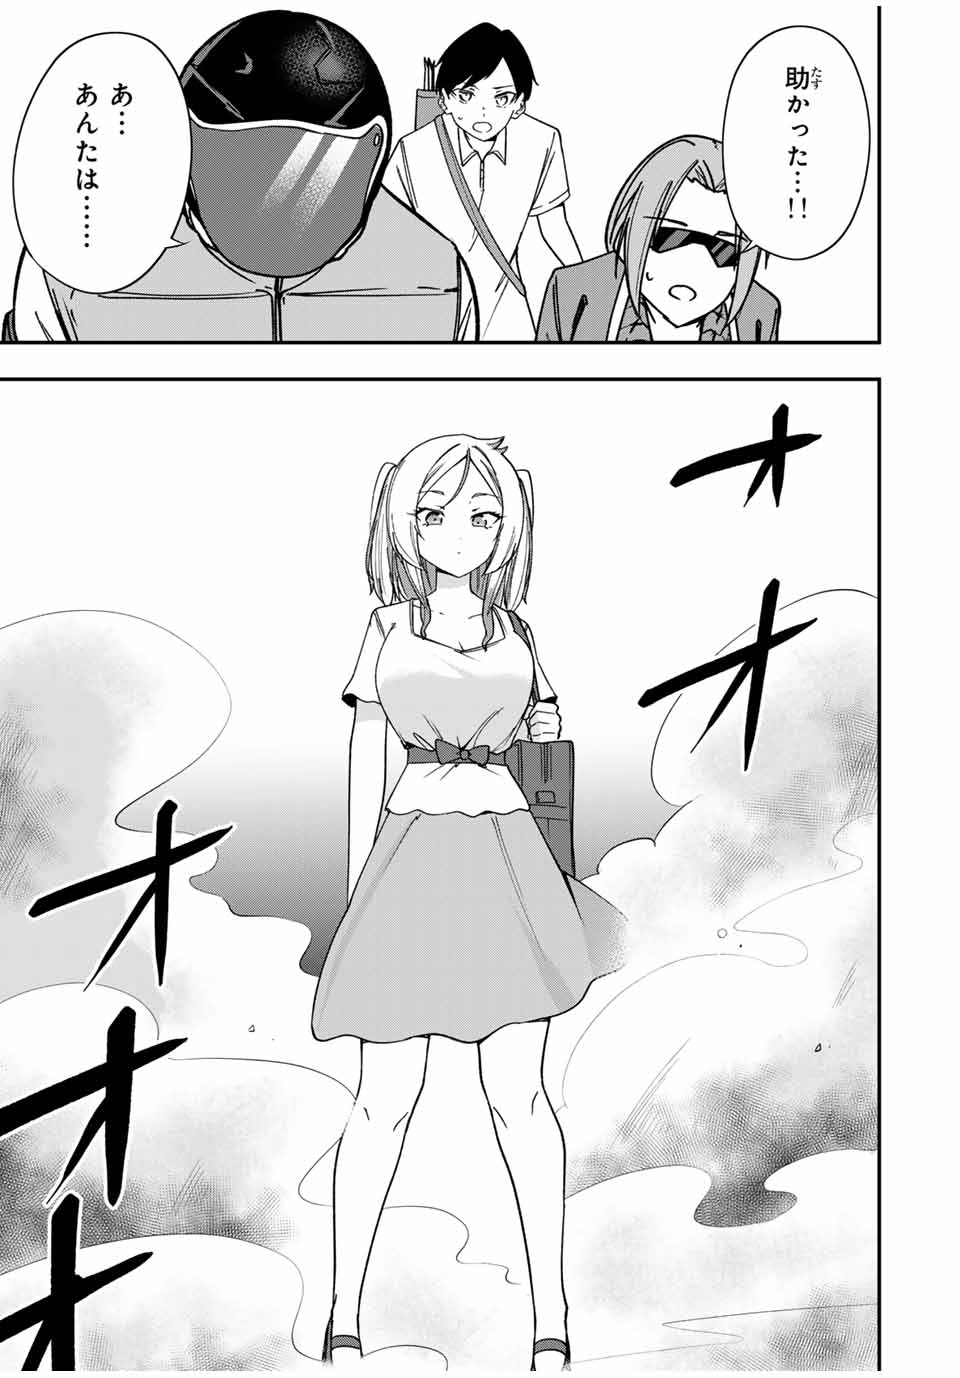 Heroine wa xx Okasegitai - Chapter 5 - Page 15